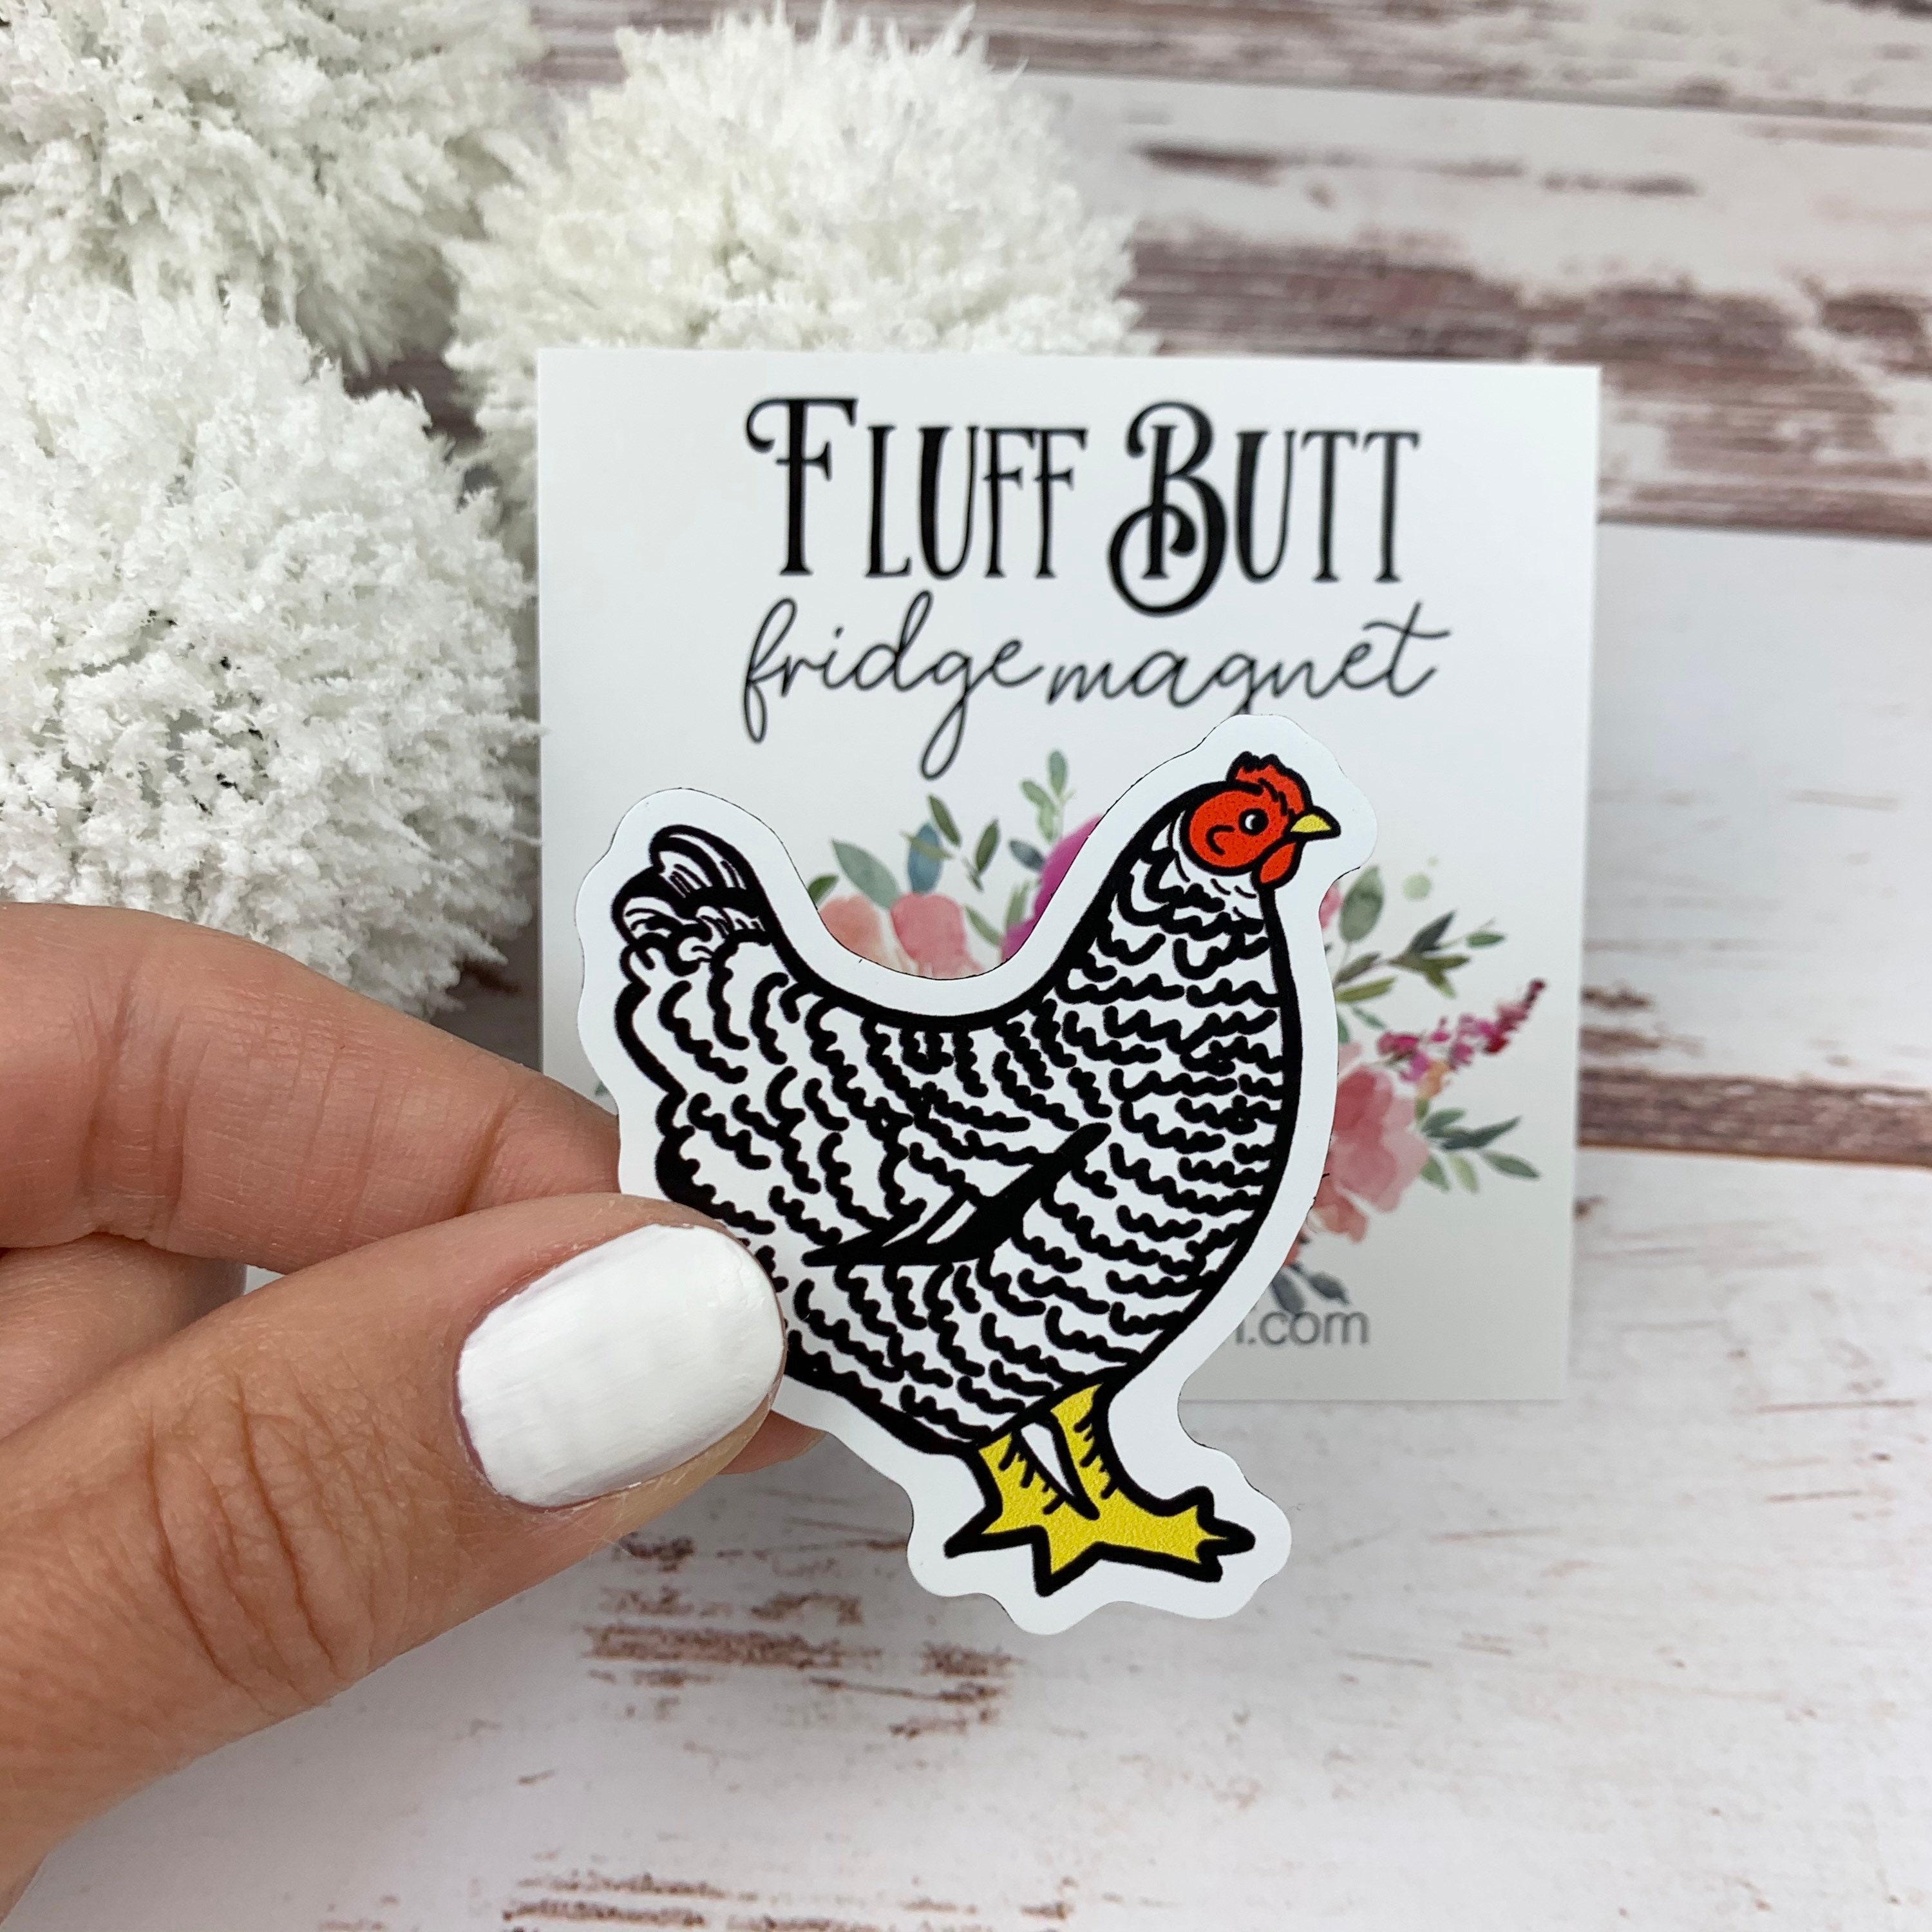 Chicken Butt Fridge Magnets - set of 3 - funny chicken gift